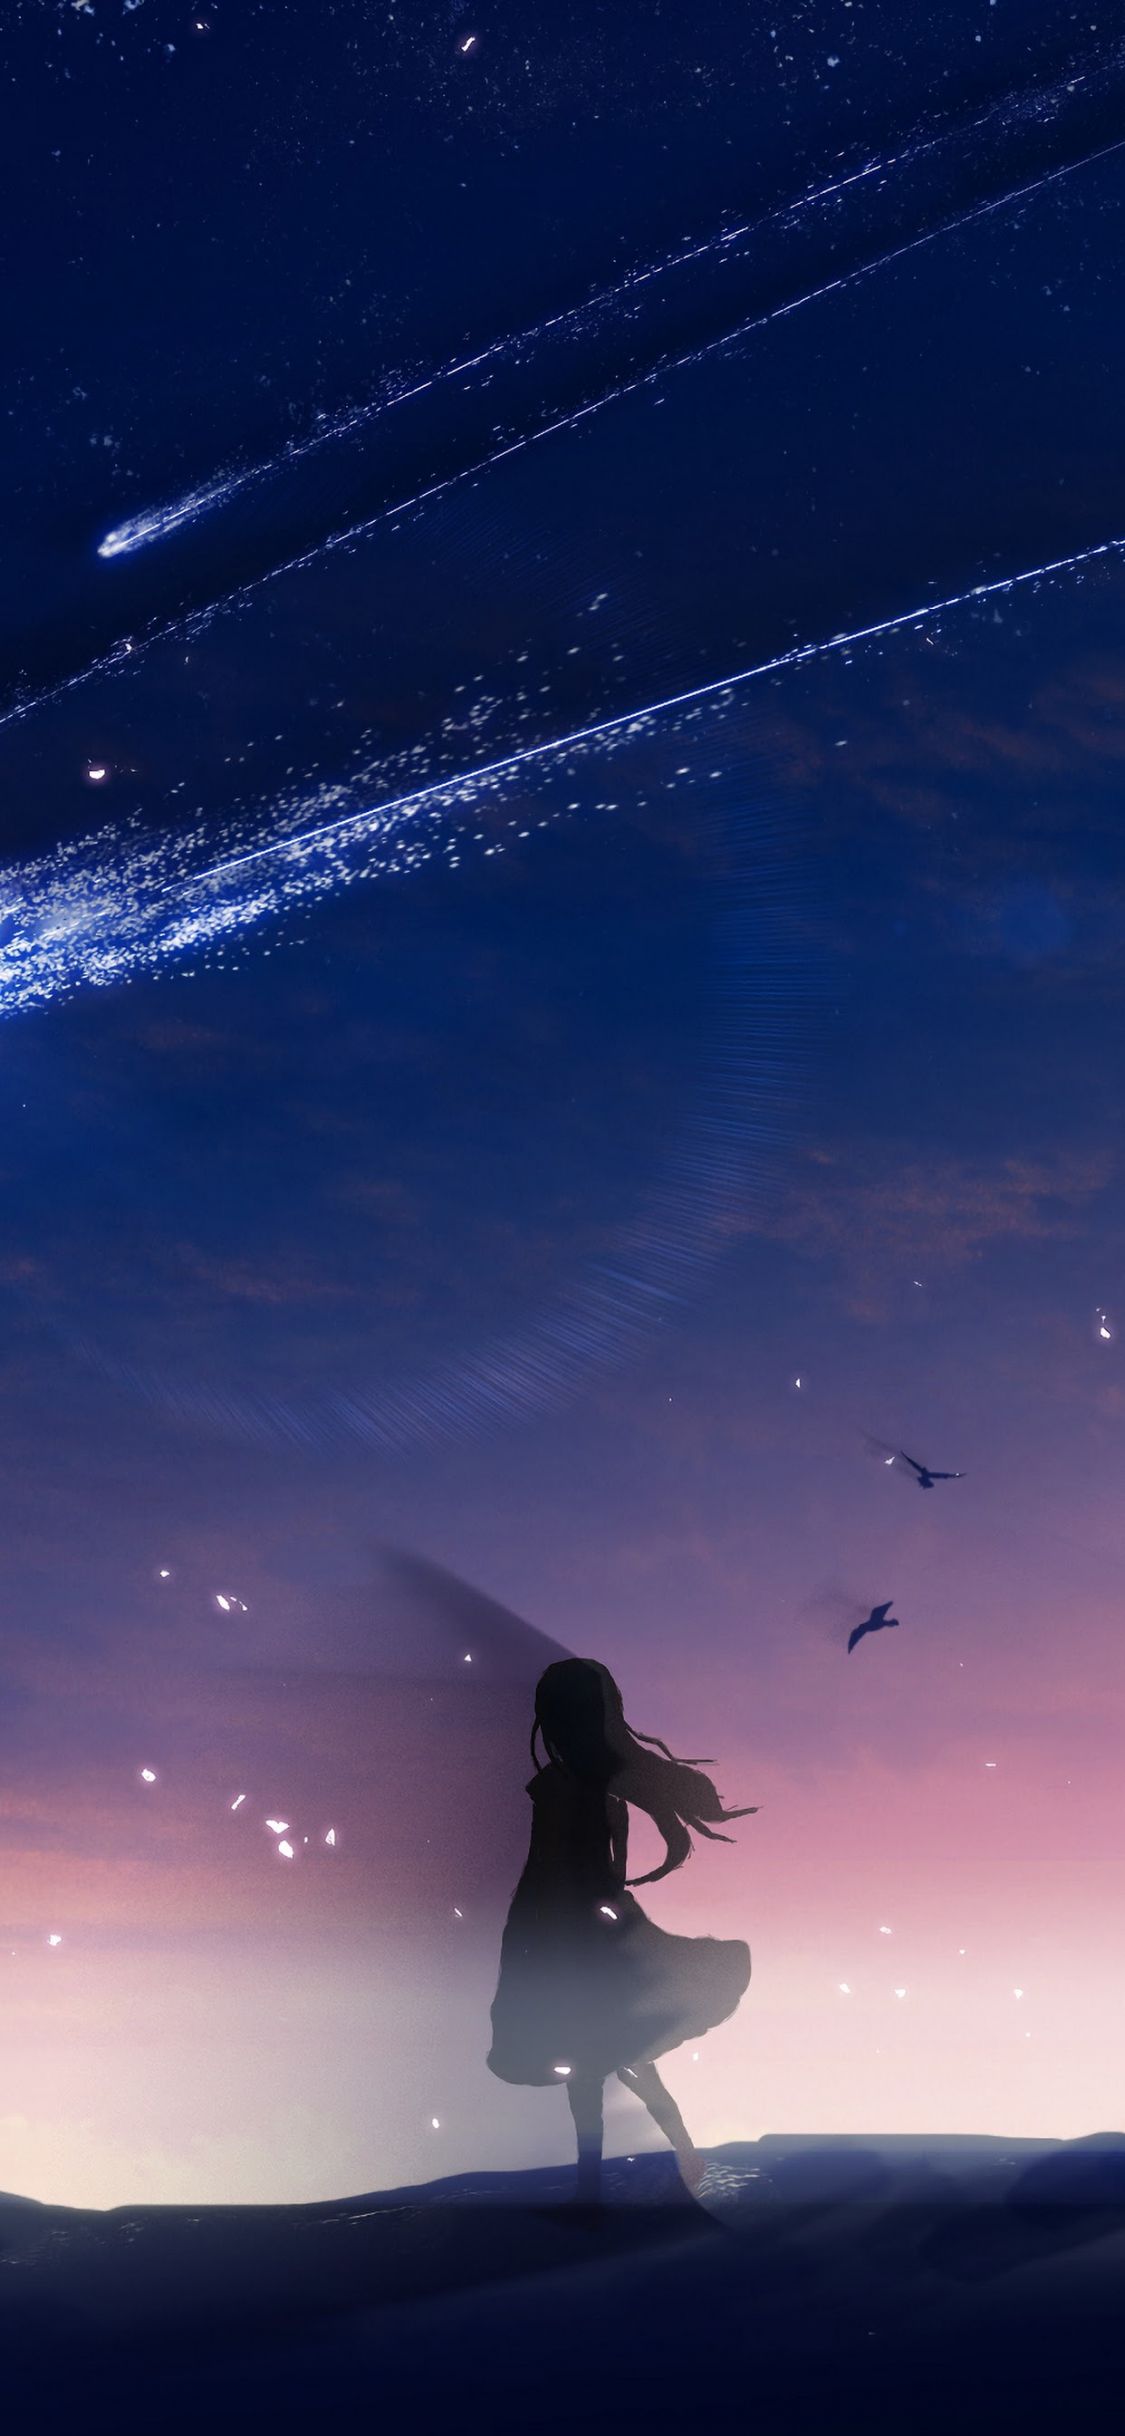 Free download Anime Night Sky Scenery Comet 4K Wallpaper 119 [1242x2688] for your Desktop, Mobile & Tablet. Explore Anime iPhone 11 4k Wallpaper. Anime iPhone 11 4k Wallpaper, iPhone 11 Pro 4k 2020 Wallpaper, iPhone 11 Wallpaper